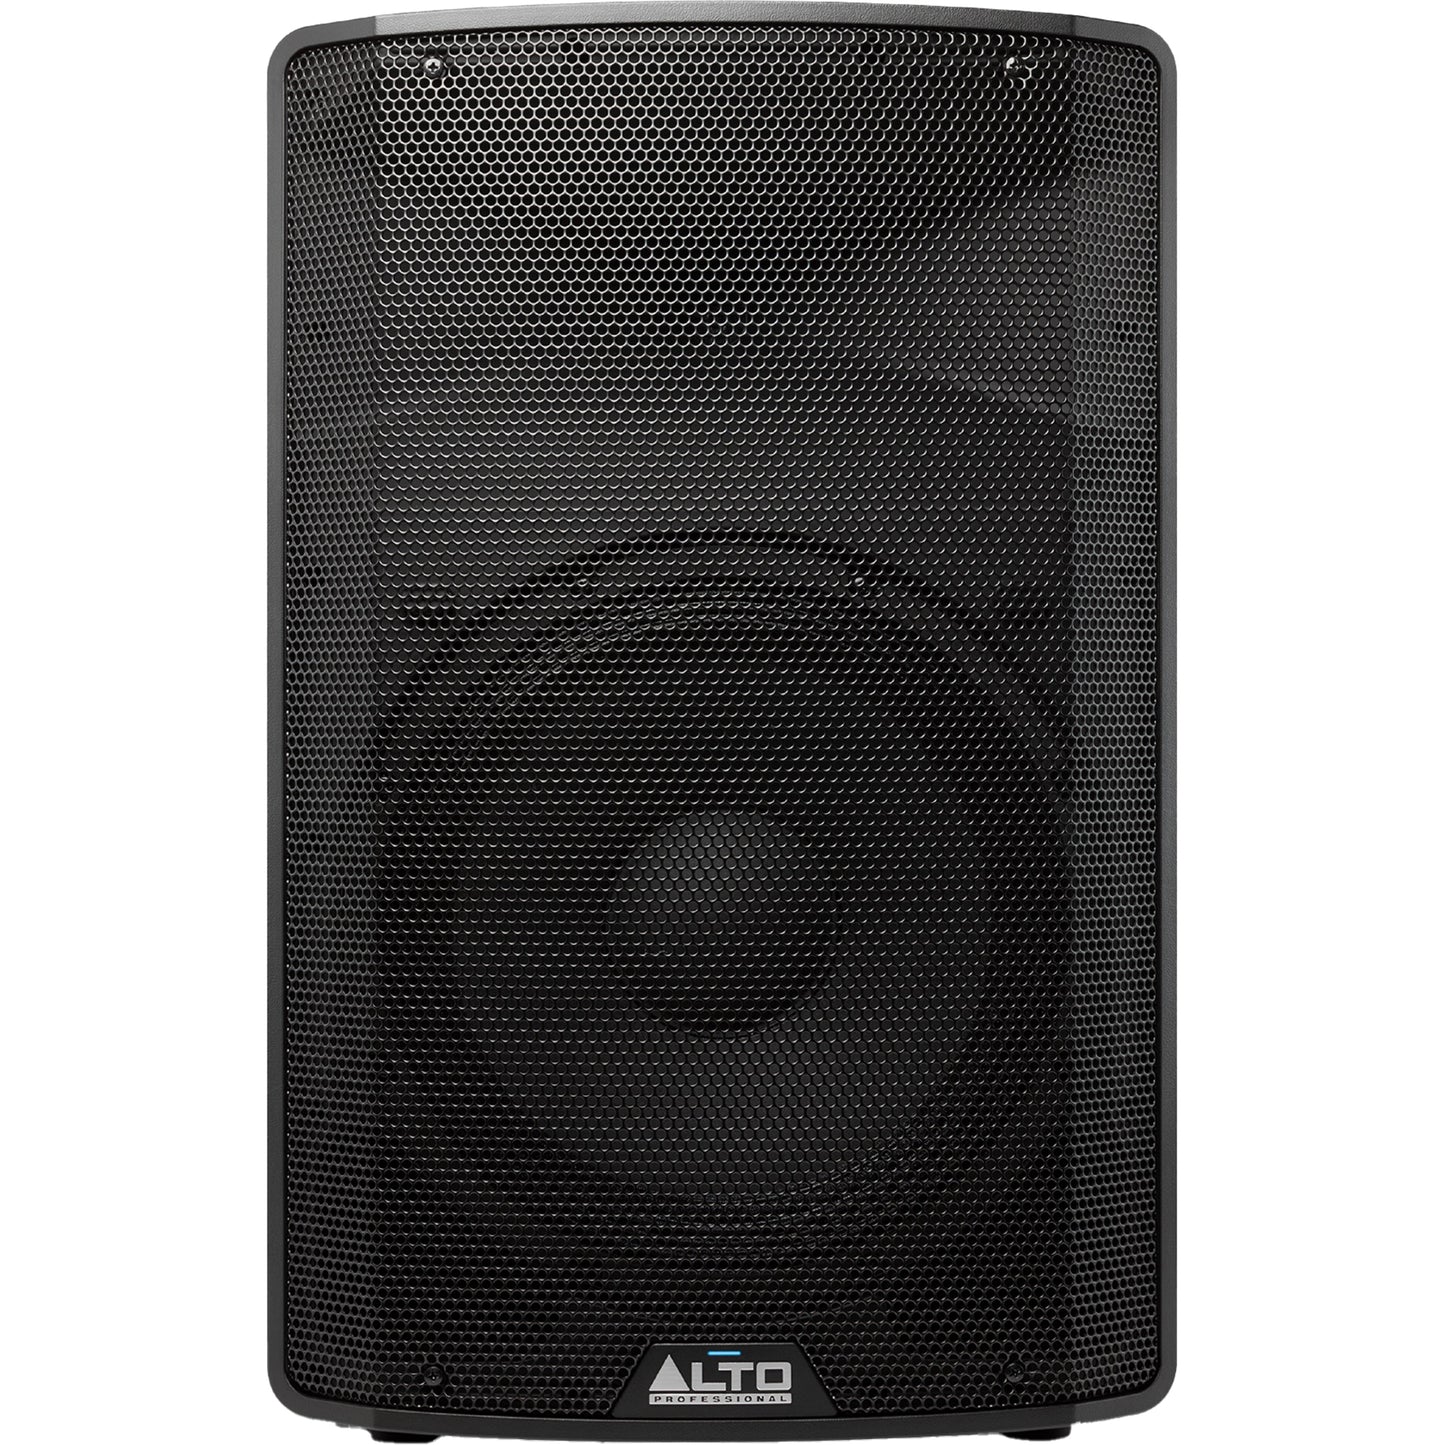 Alto Professional TX312 700-Watt 12-Inch 2-Way Powered Loudspeaker